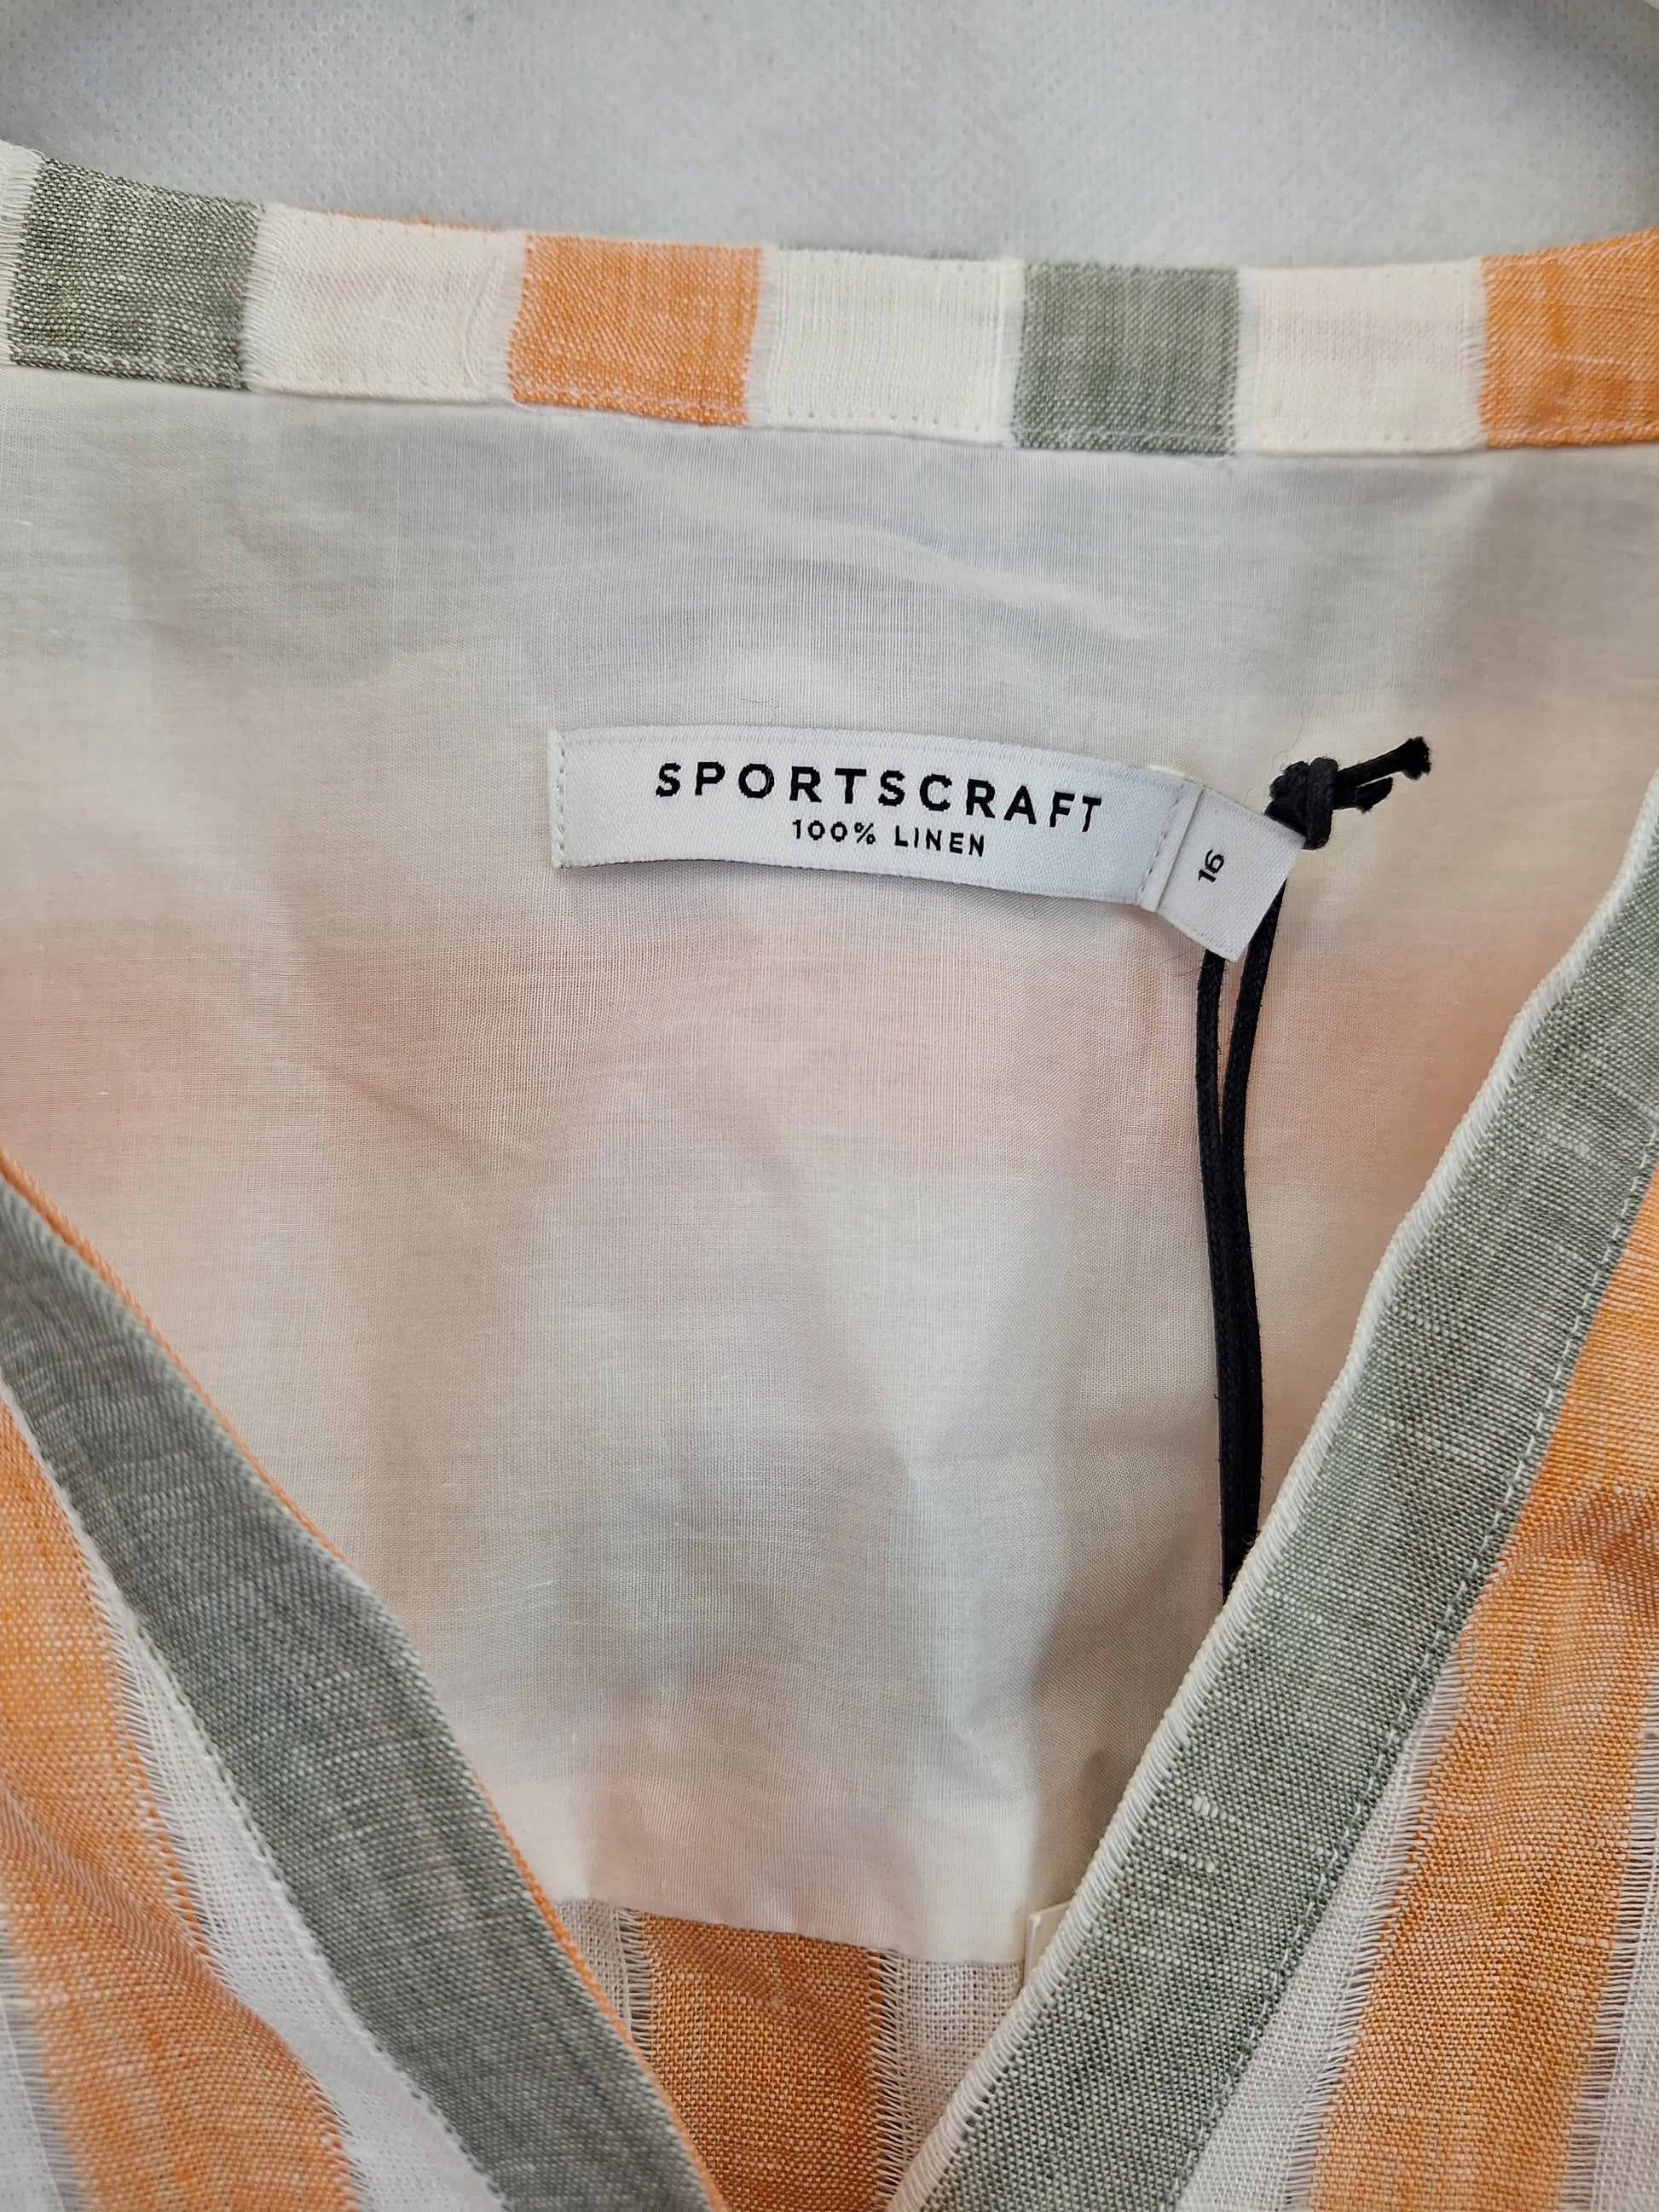 Sportscraft Linen Striped Shirt Top Size 16 by SwapUp-Online Second Hand Store-Online Thrift Store